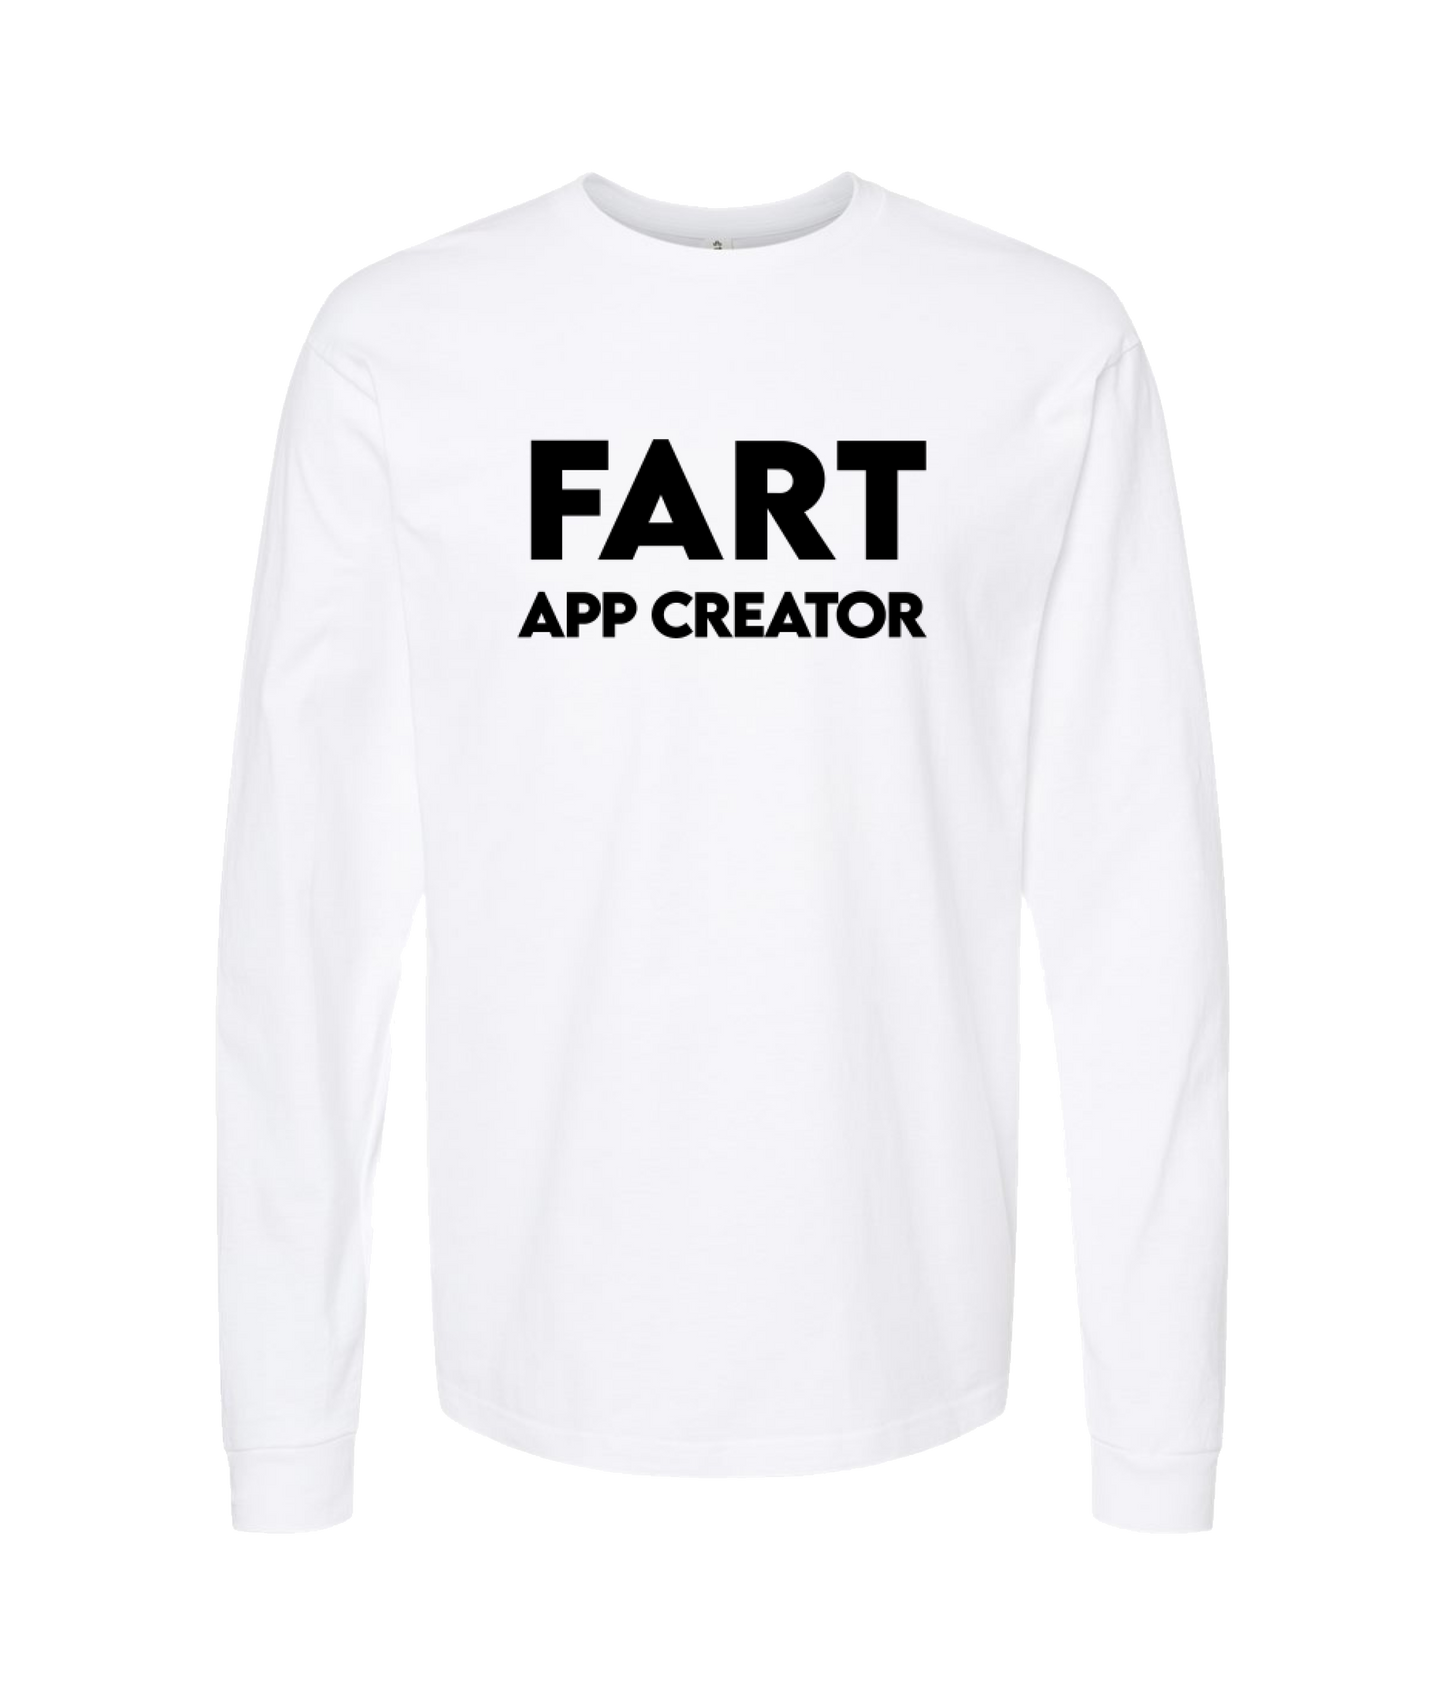 iFart - APP CREATOR - White Long Sleeve T